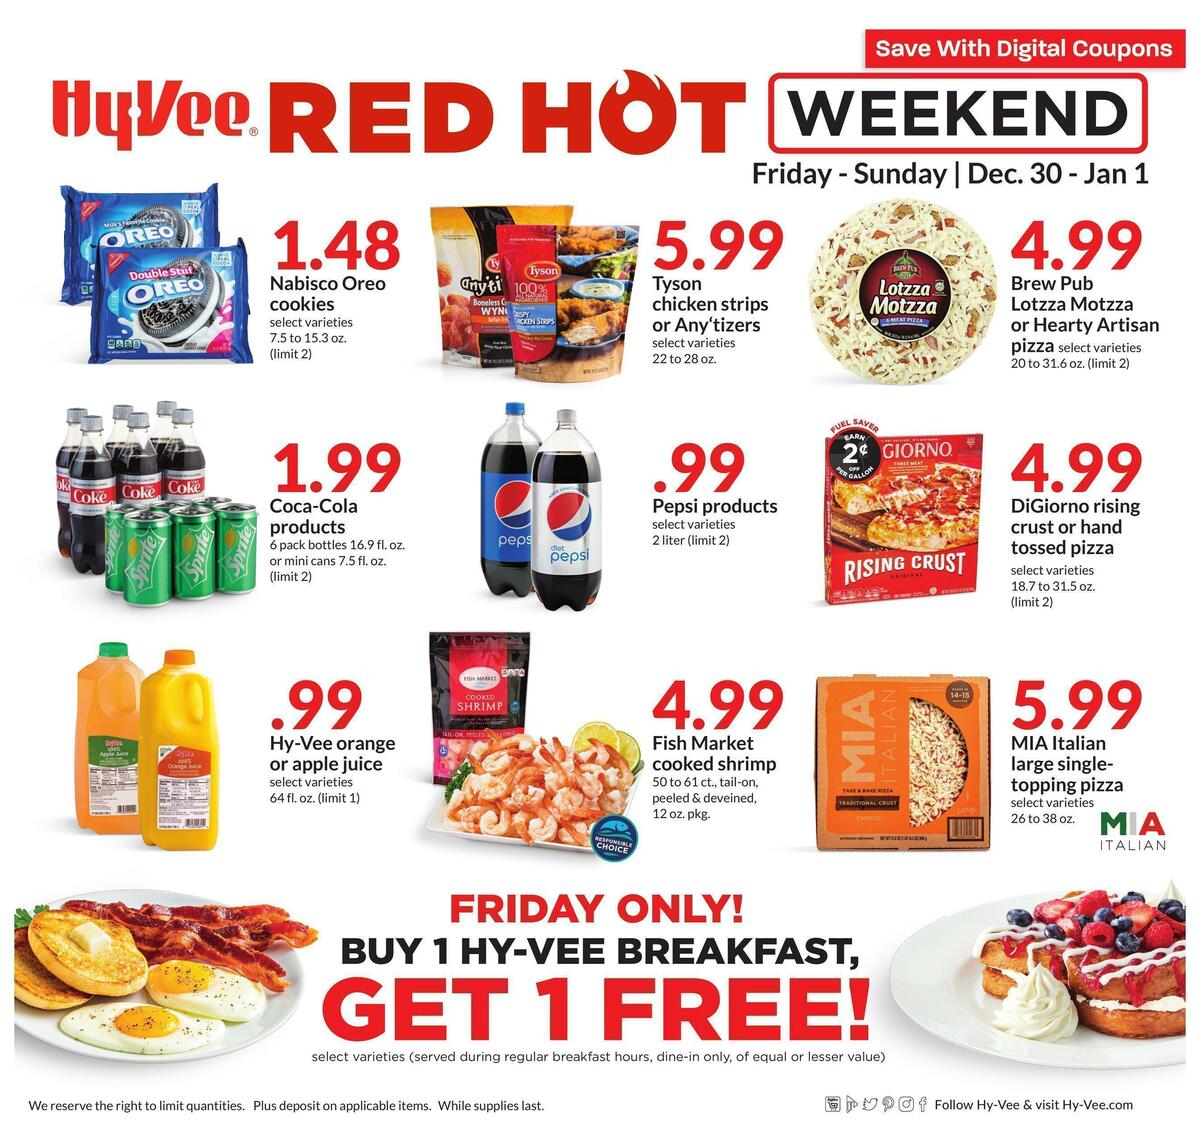 Hy-Vee Red Hot Weekend Weekly Ad from December 30